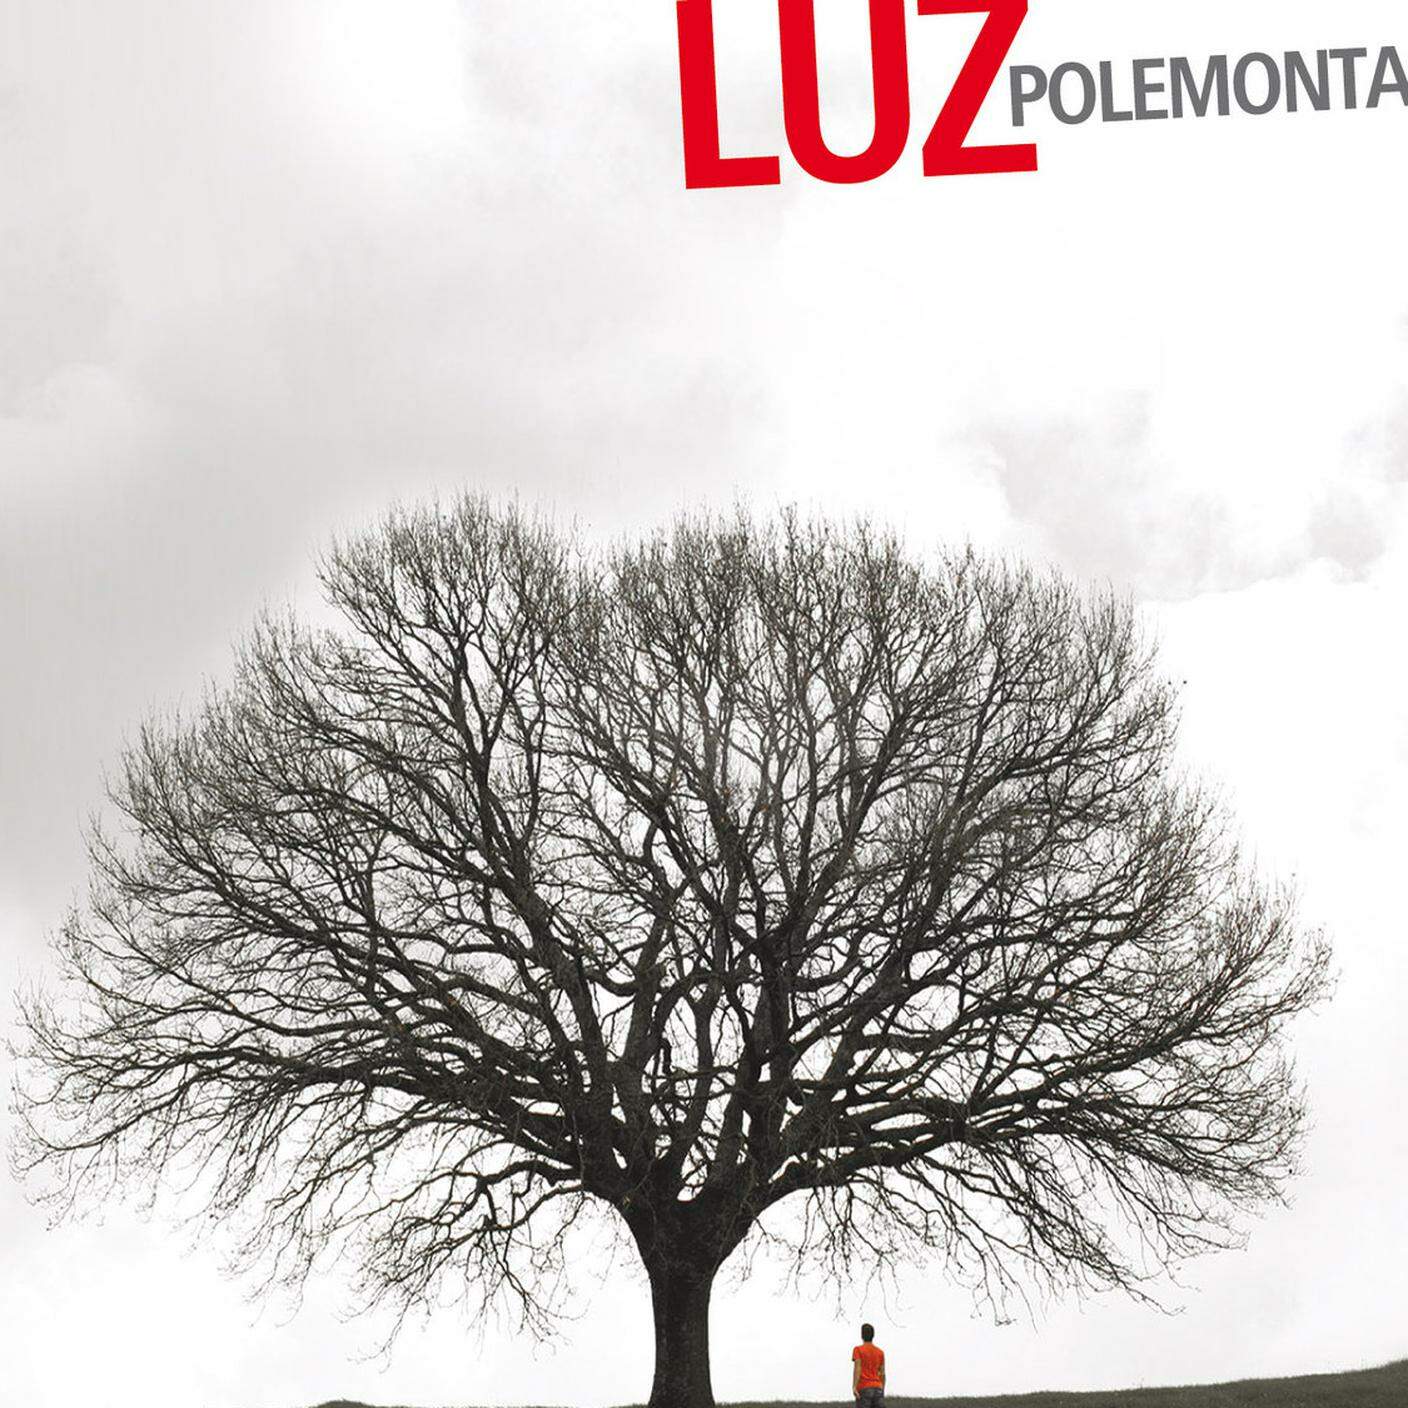 Luz, "Polemonta", Auand (dettaglio copertina)